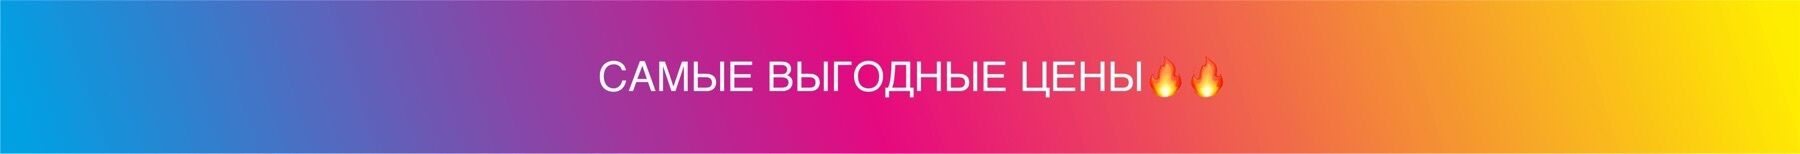 Haktan Group ➤ Кыргызстан ᐉ Бизнес-профиль компании на lalafo.kg